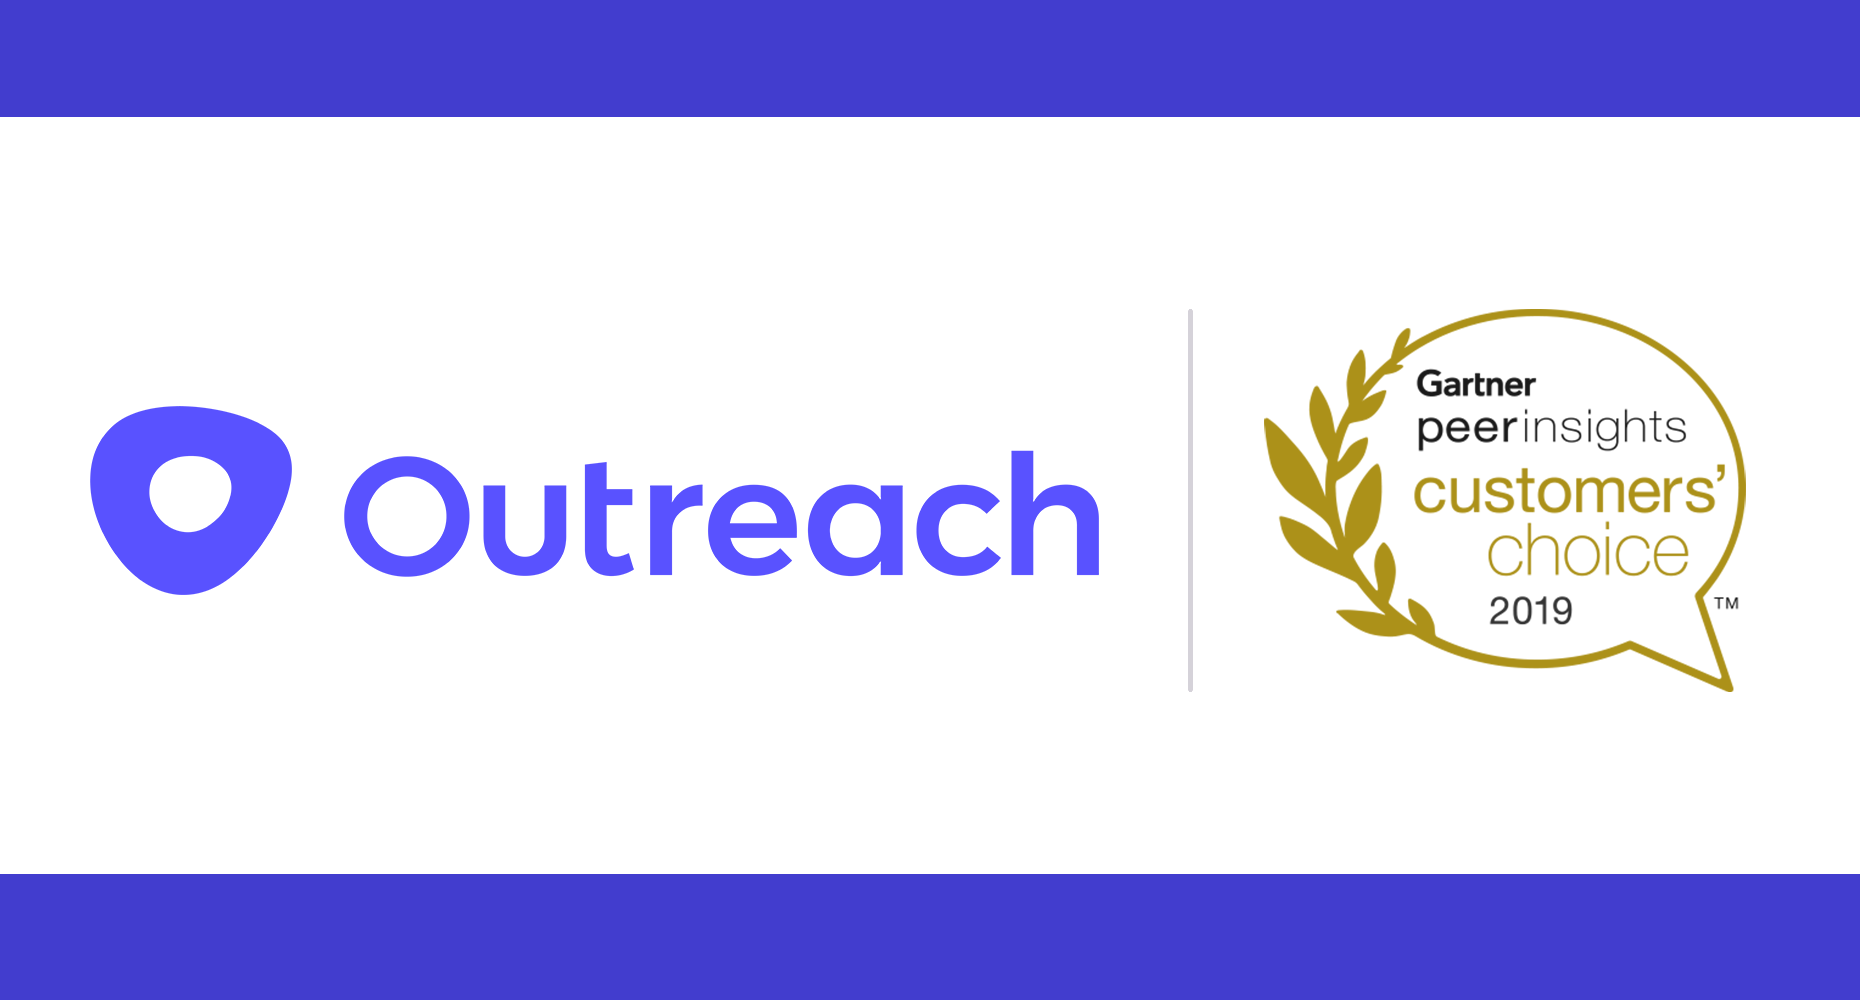 Gartner peer insights customer choice 2019 outreach badge